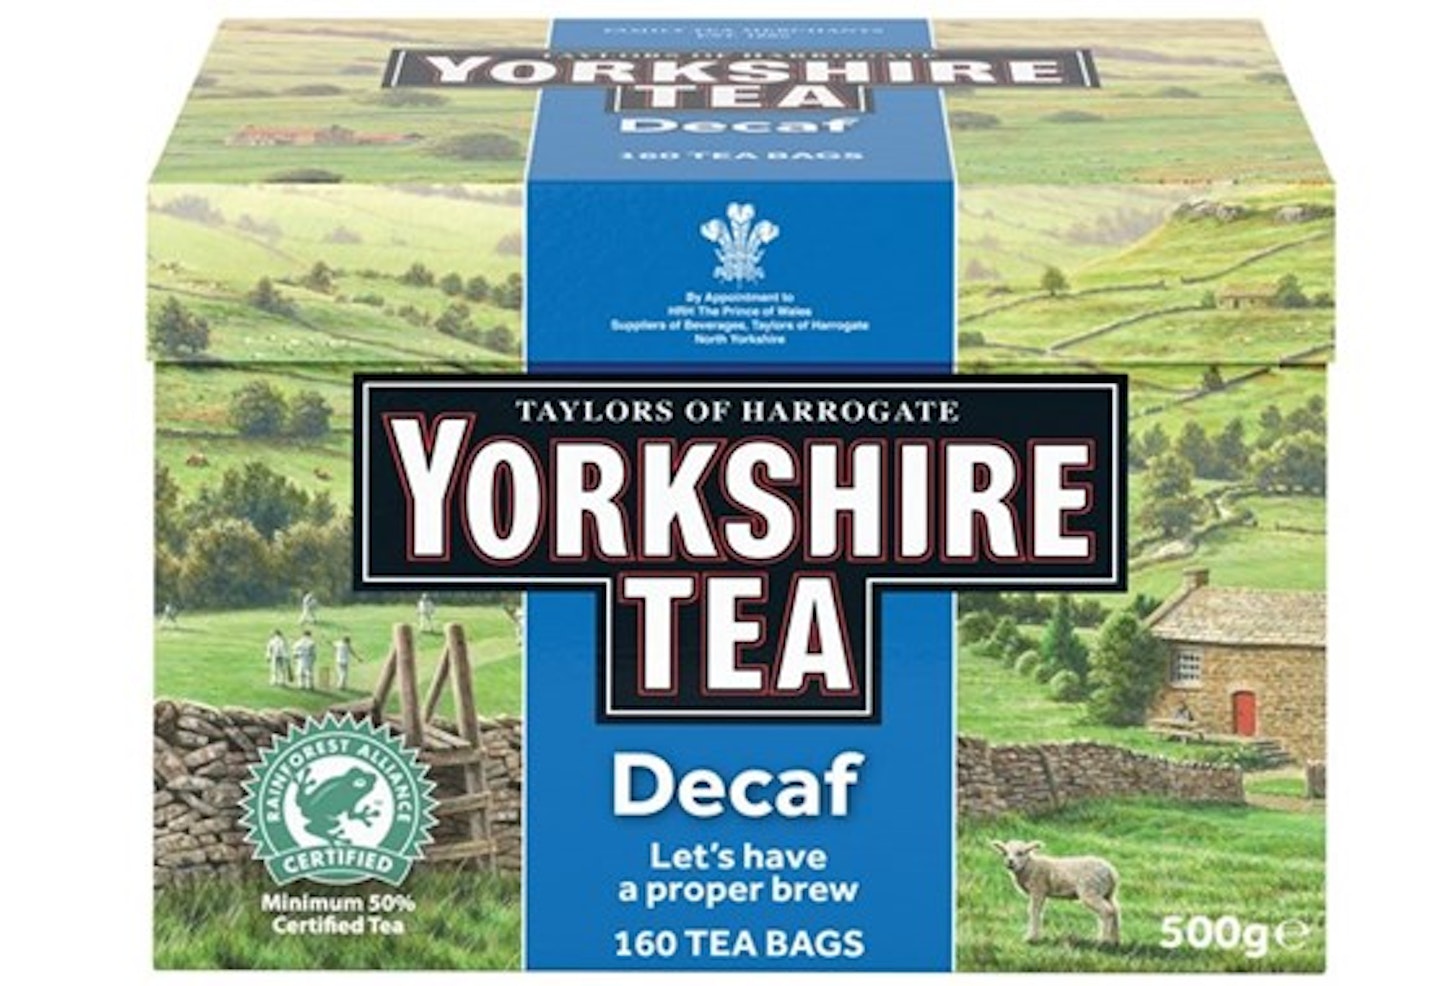 Yorkshire Tea decaf